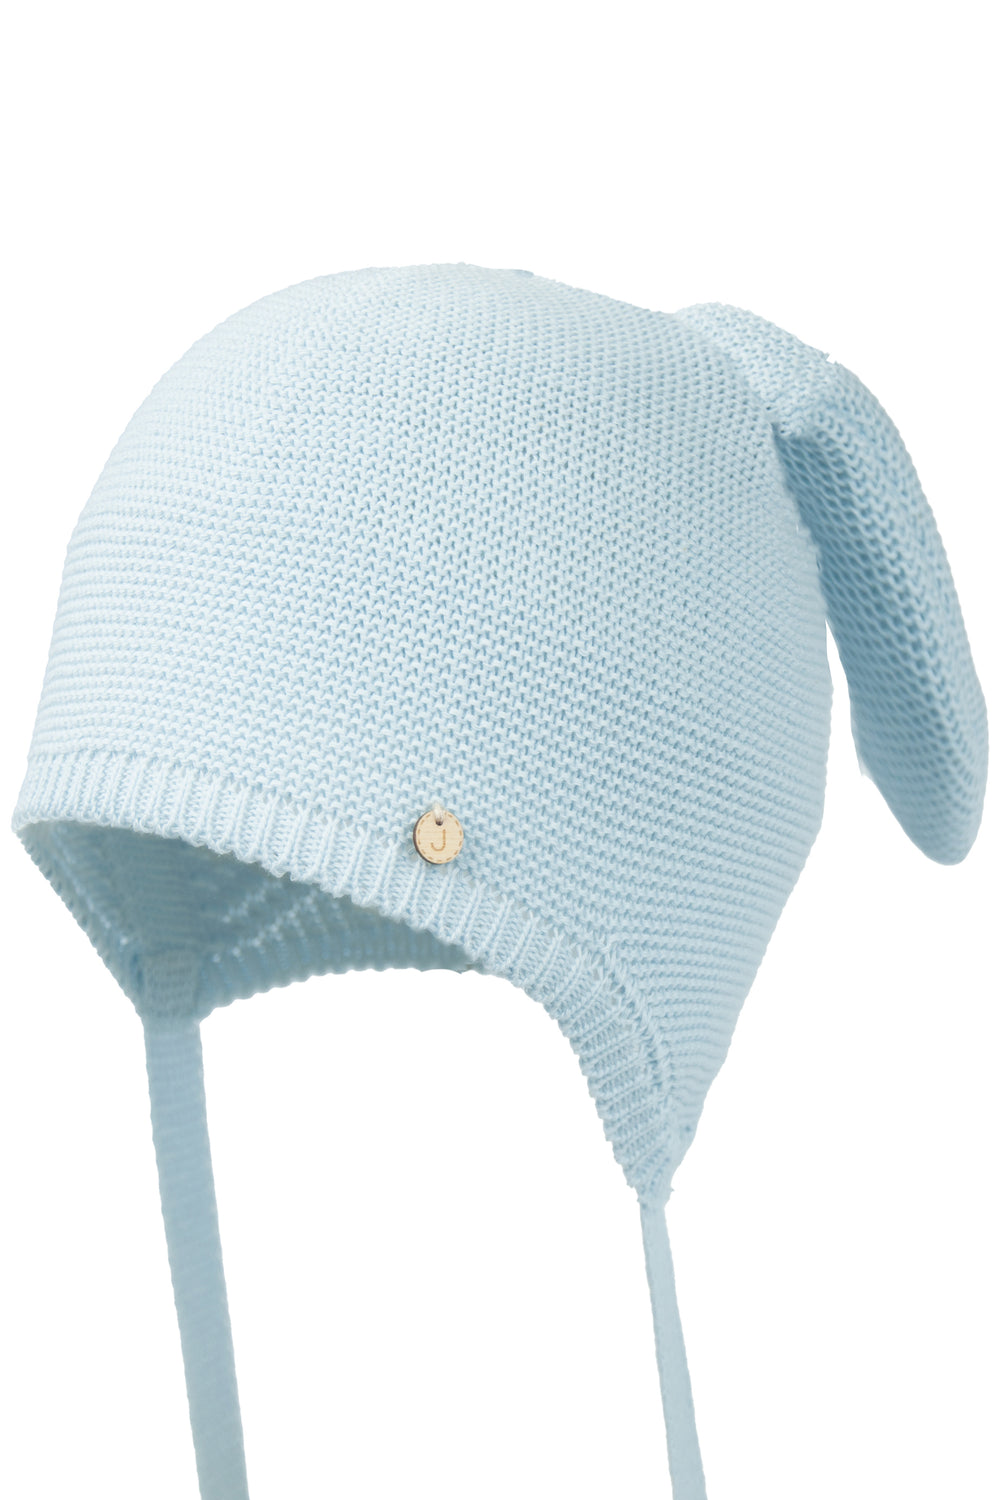 Jamiks "Bugs" Light Blue Knit Bunny Hat | Millie and John